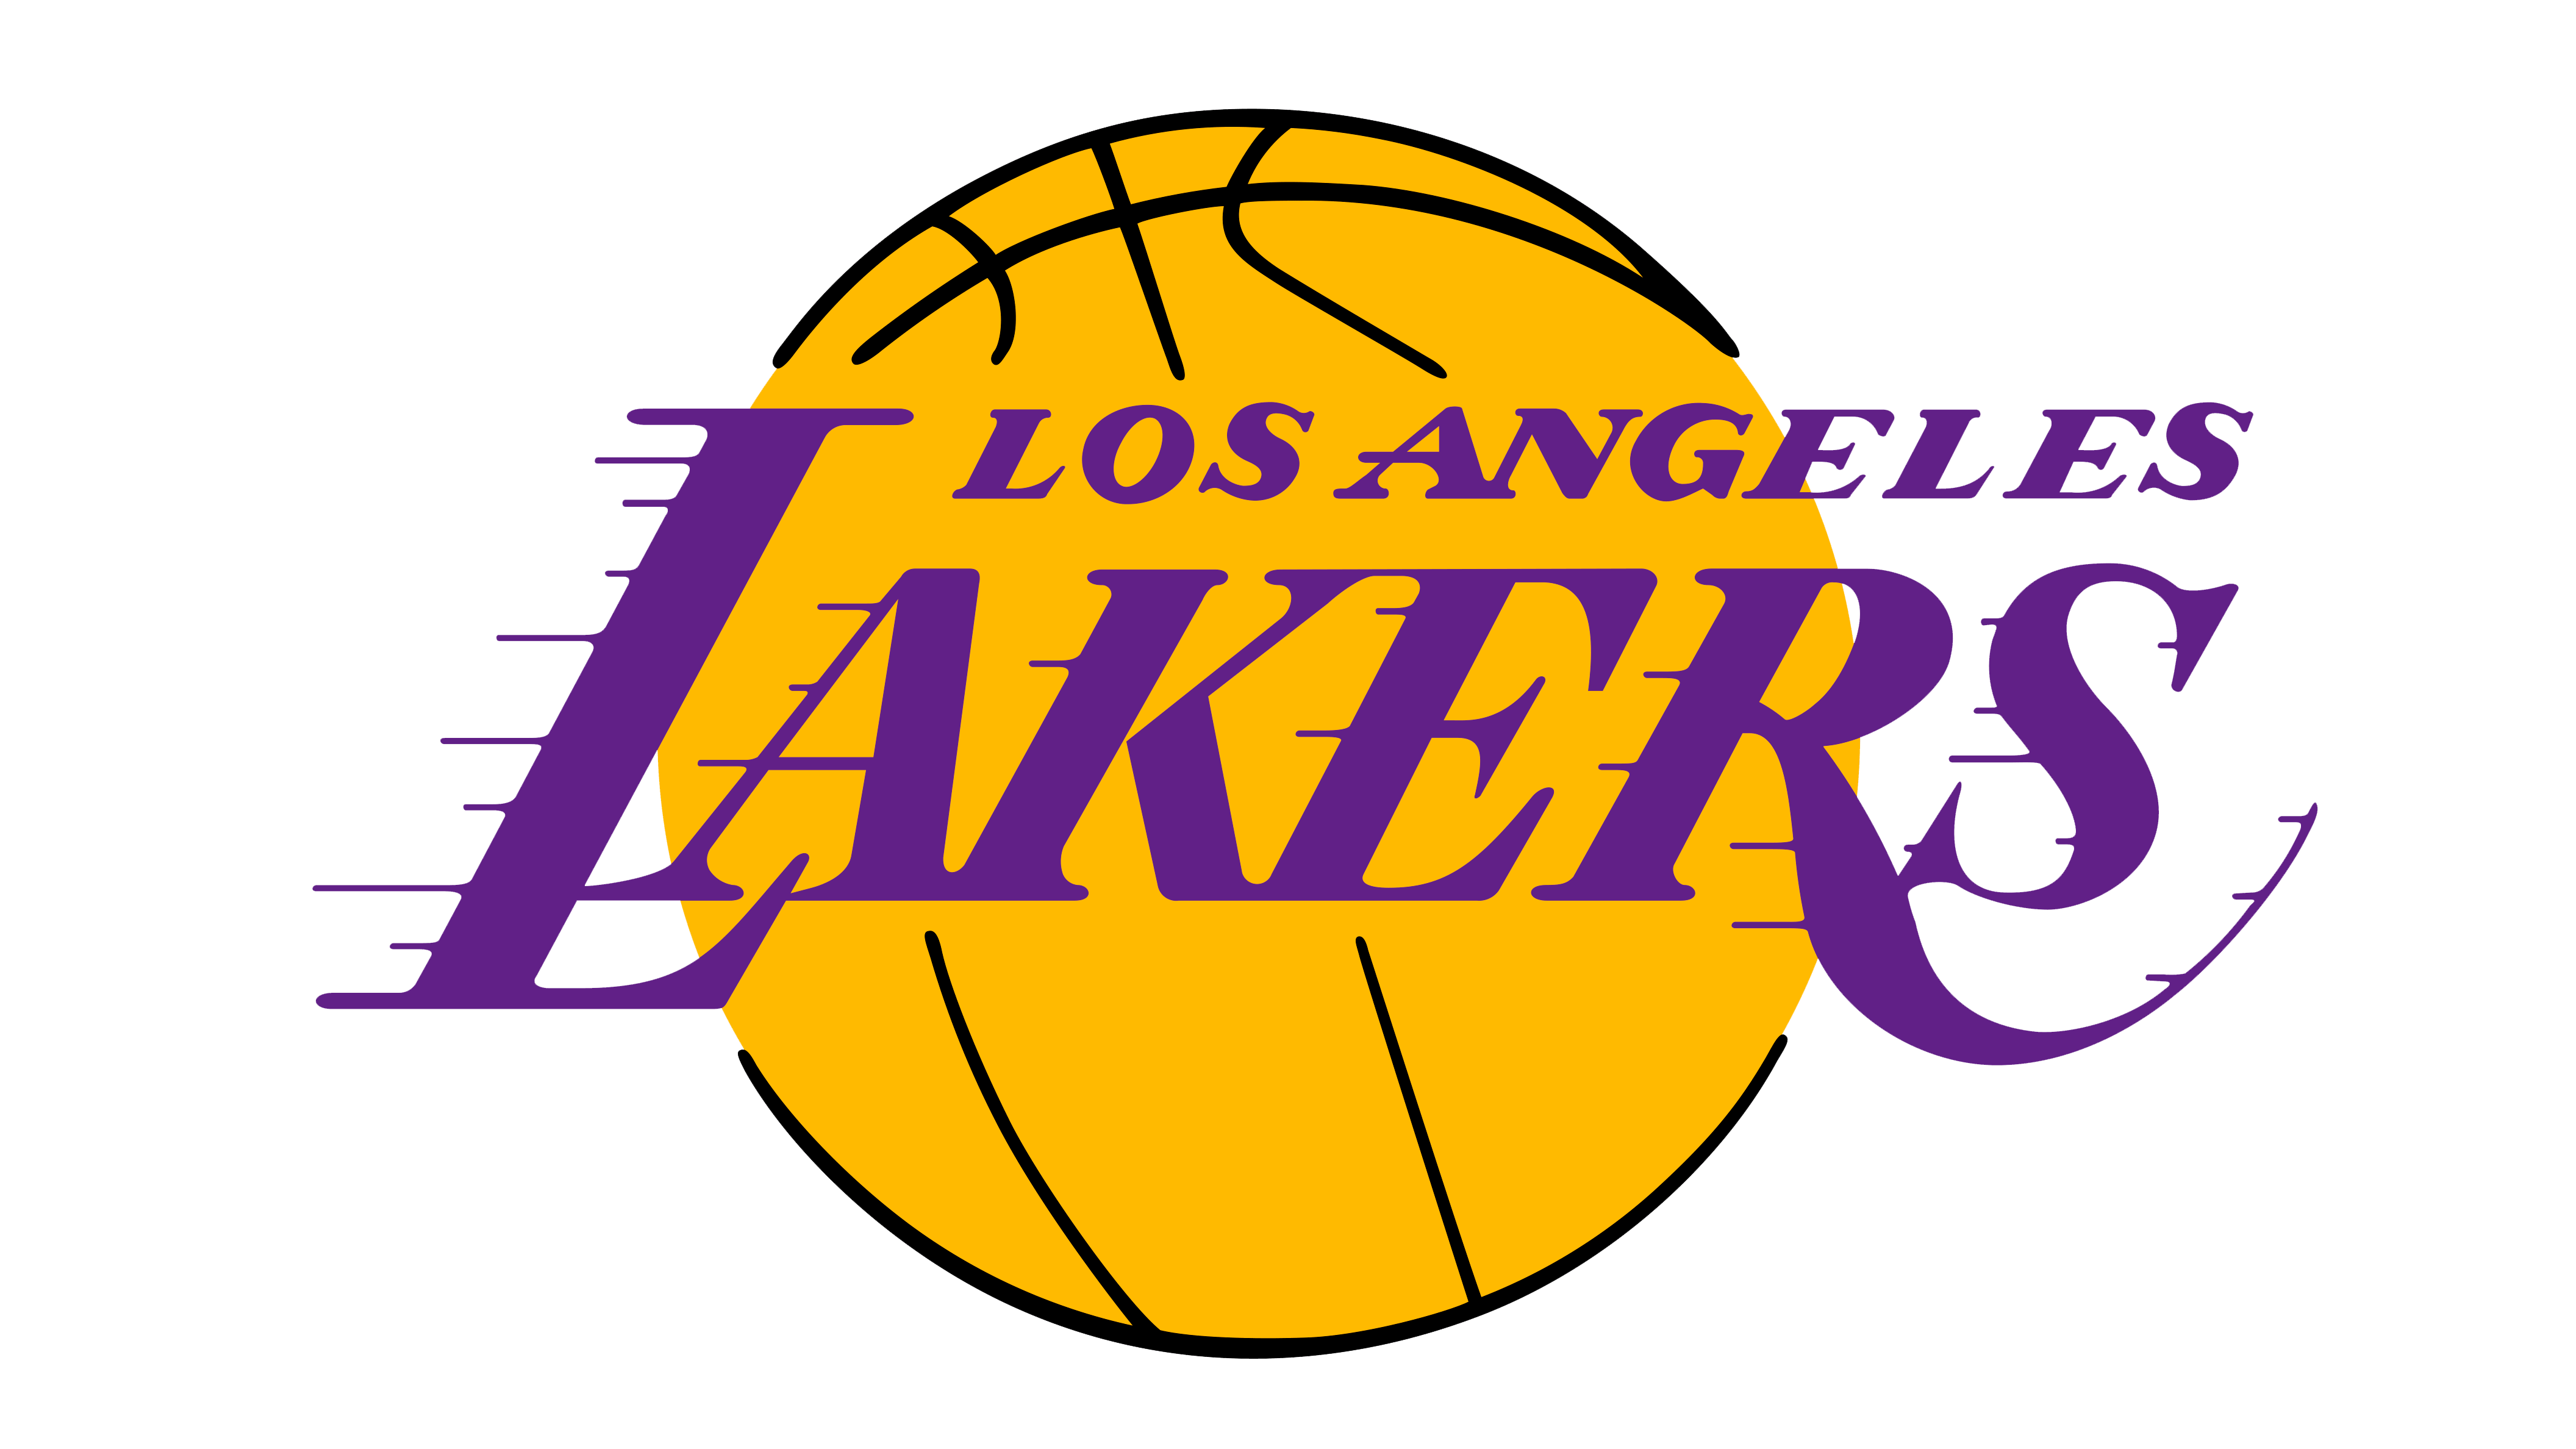 Los Angeles Lakers Logo PNG Transparent High Resolution pngteam.com